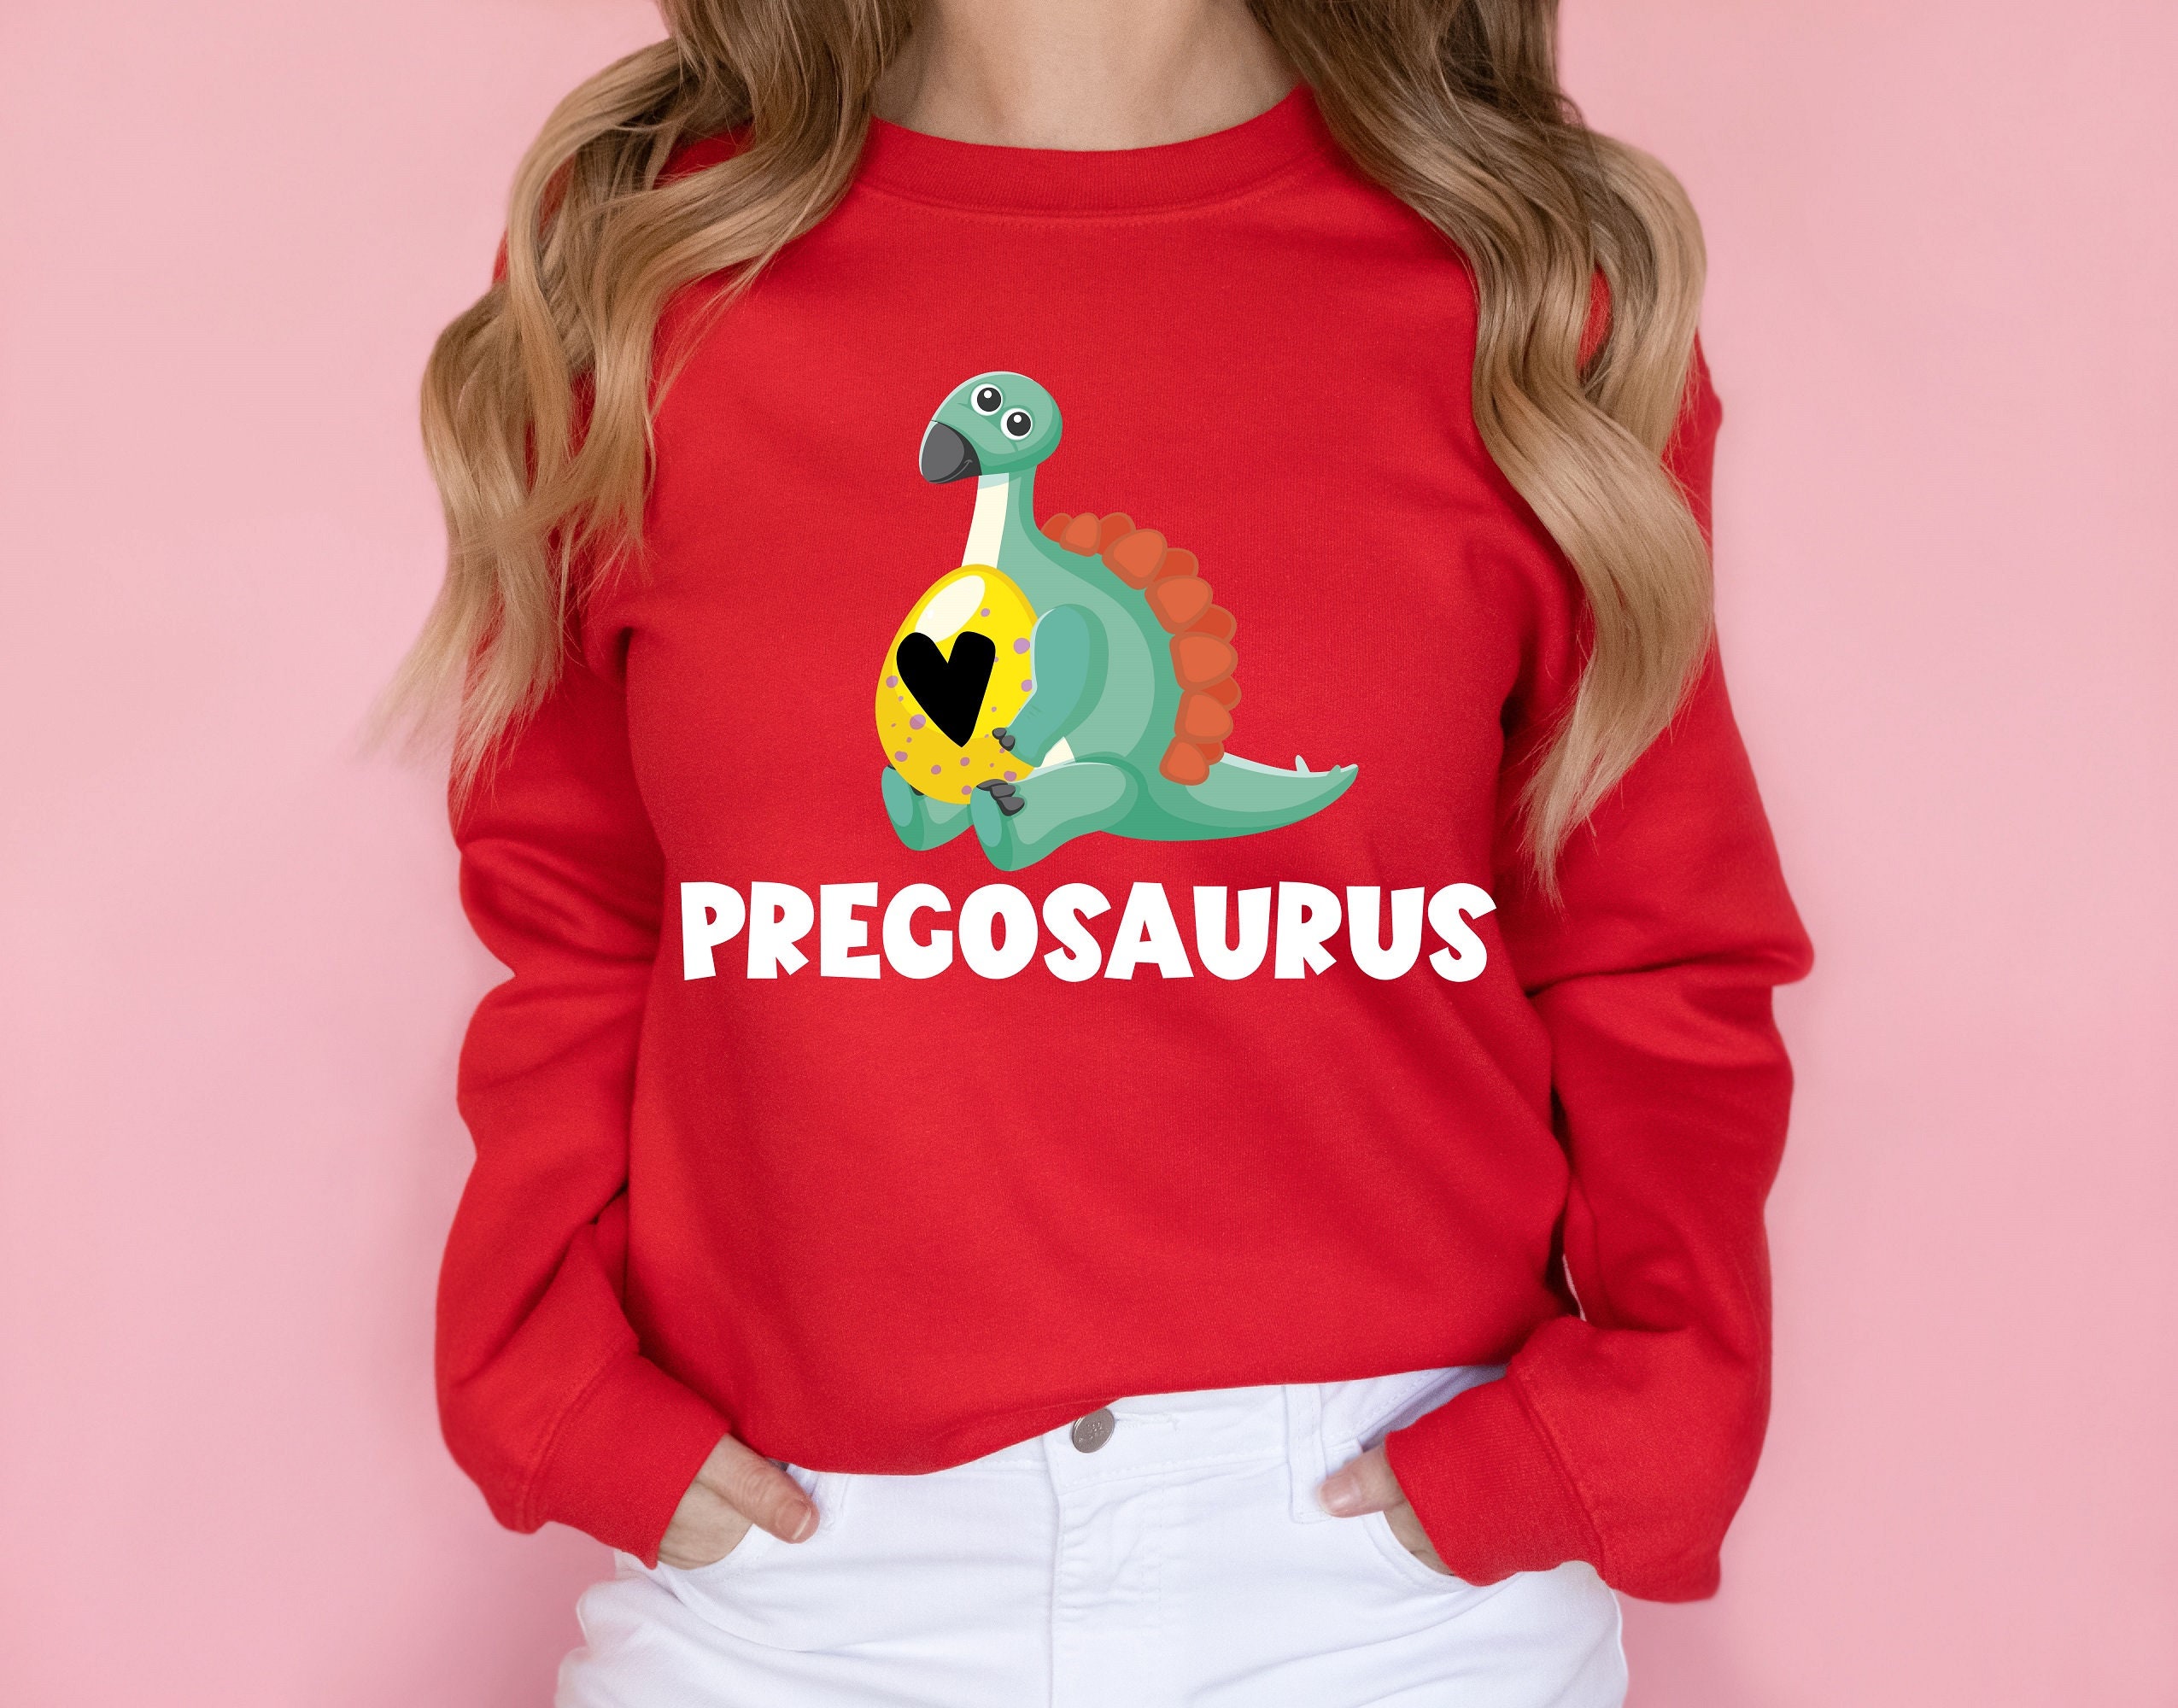 Discover Pregosaurus Pregnant Sweatshirt, Pregnancy Reveal To Husband